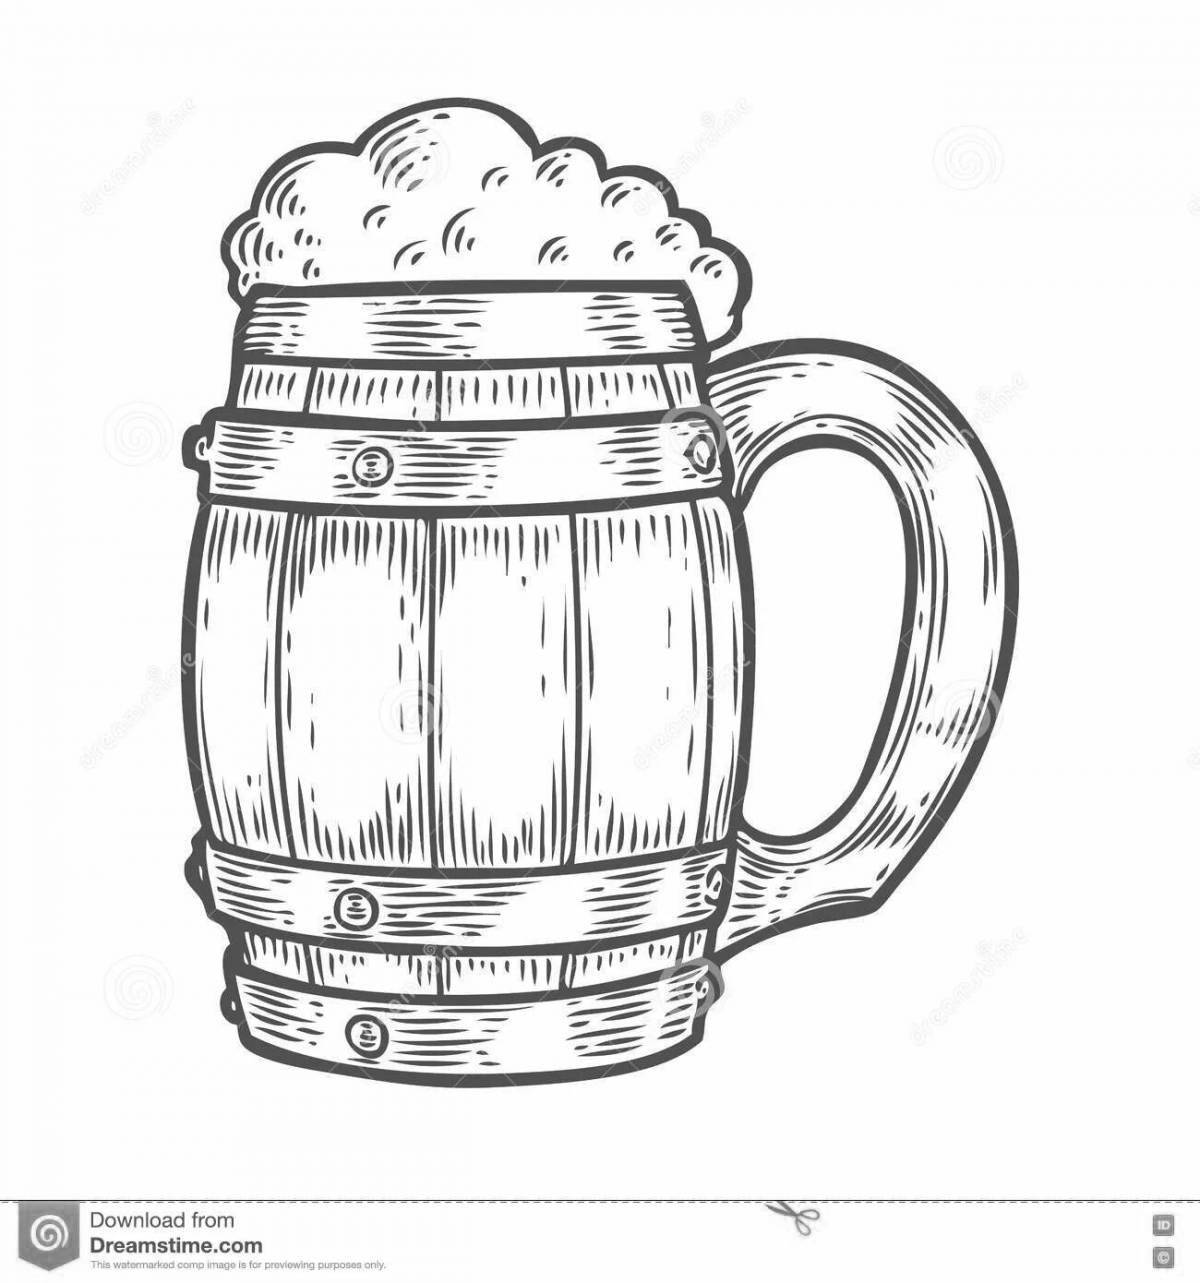 Refreshing beer mug coloring book